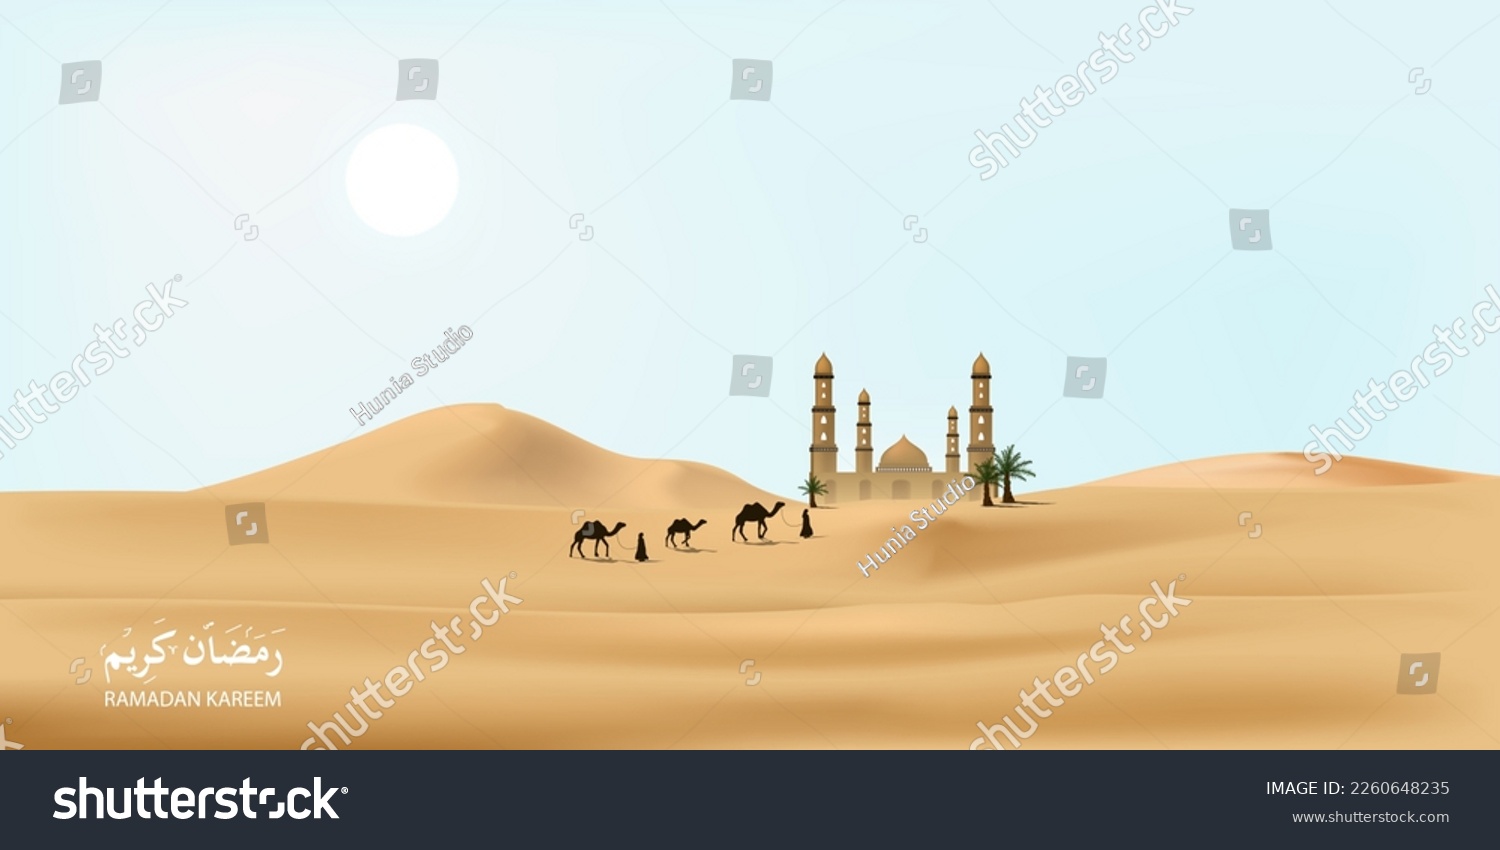 SVG of ramadan kareem illustration with desert scenery beautiful bright sky on the desert with camel, dates tree and caravan. vector illustration.  svg